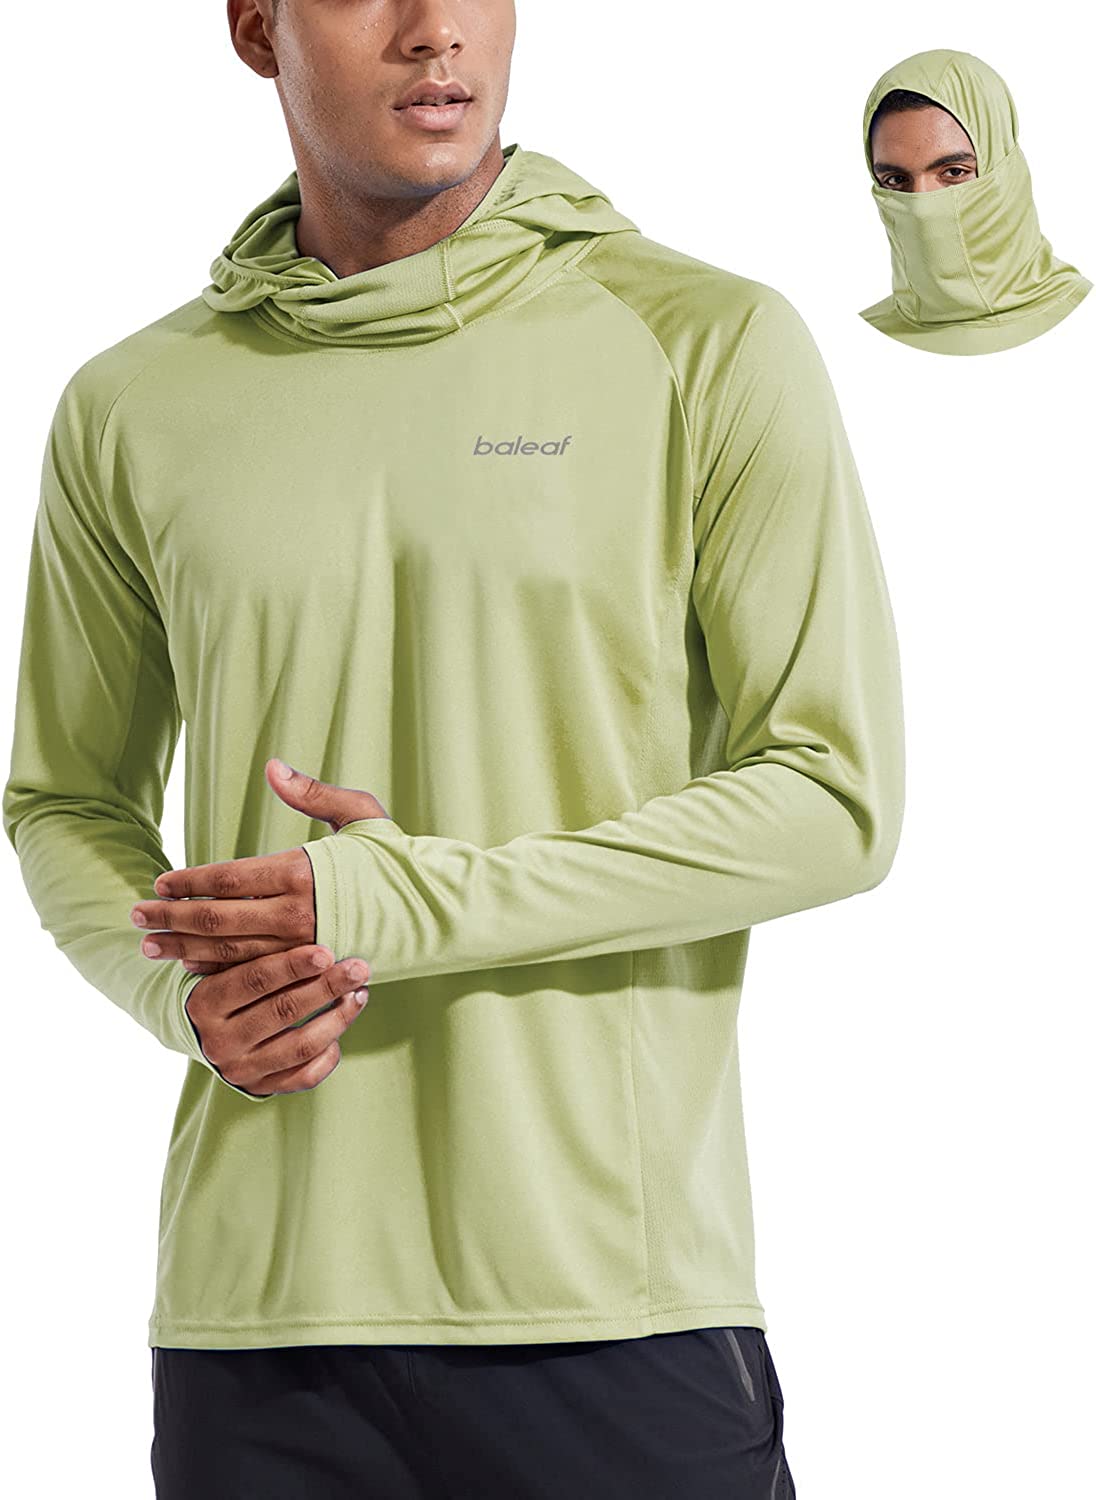 BALEAF Men's Sun Protection Hoodie Shirt UPF 50+ Long Sleeve UV